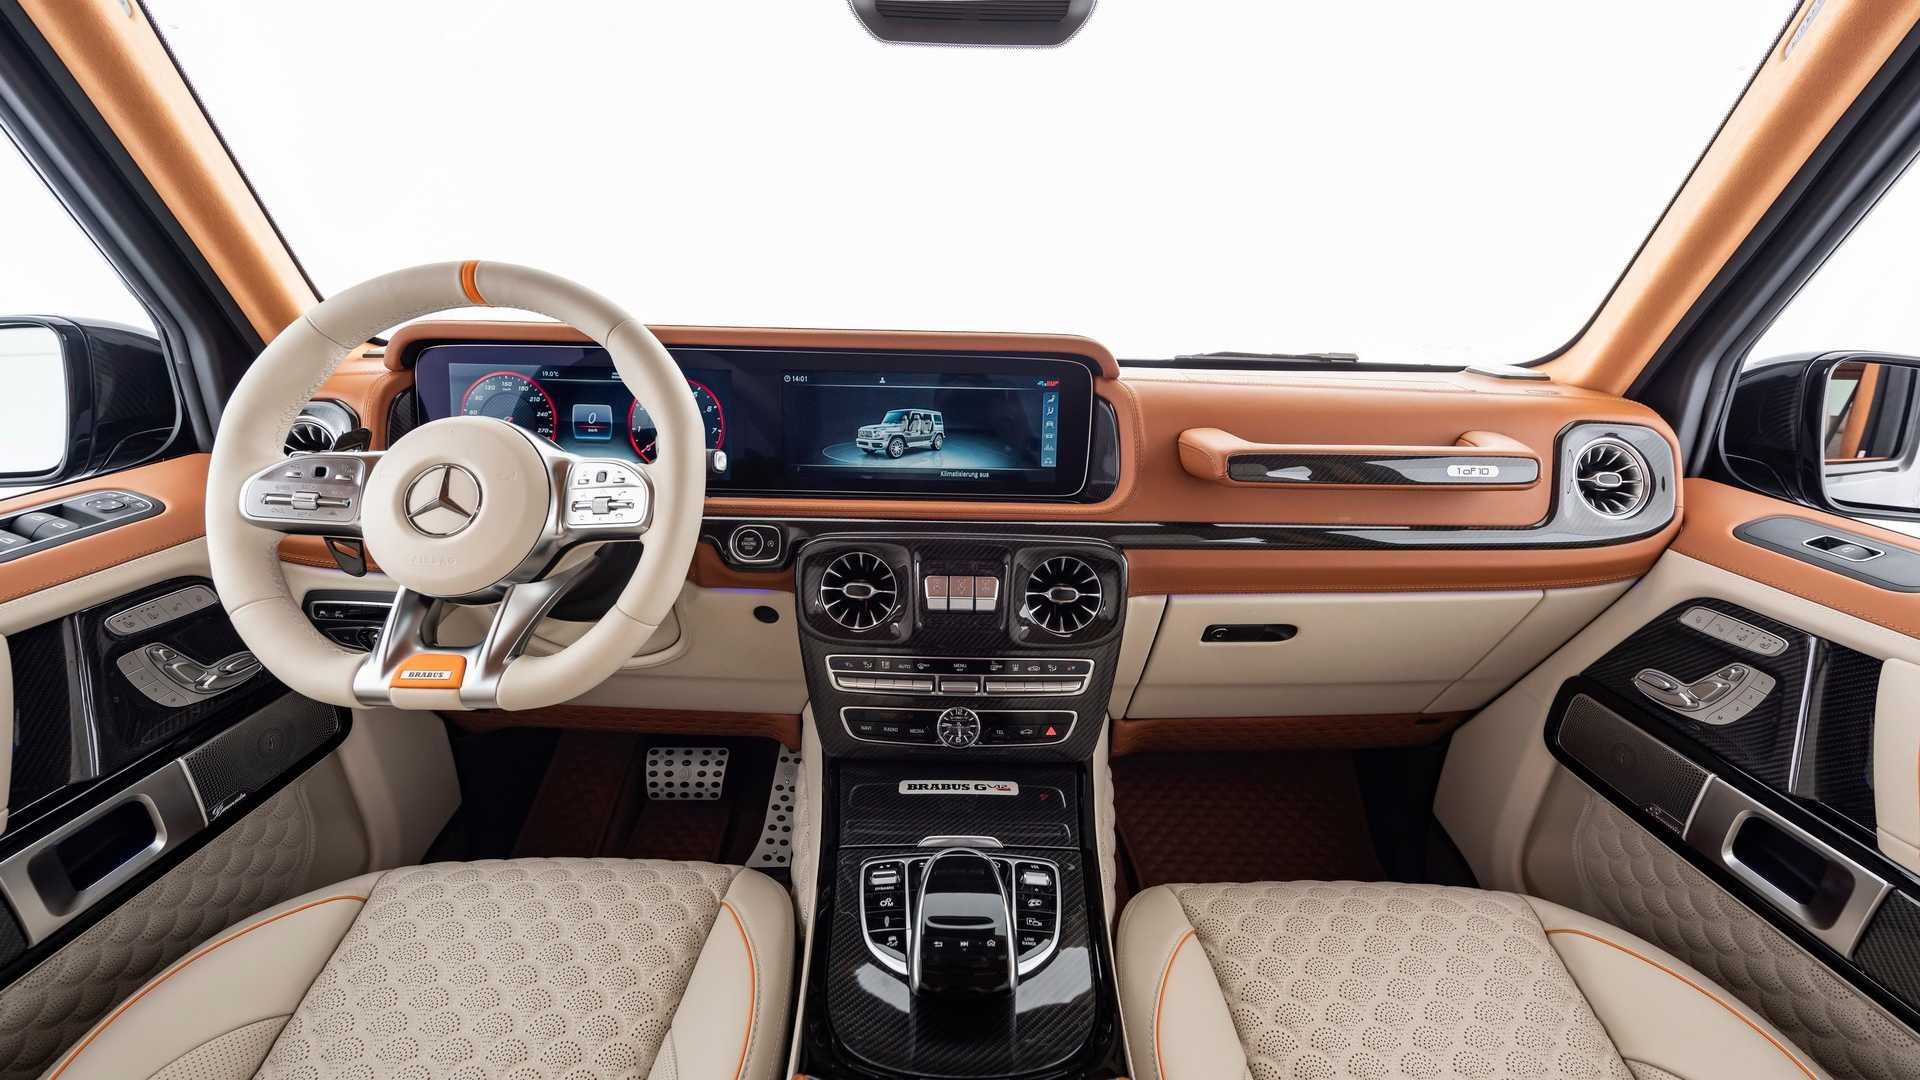 2019 Mercedes G-Class 900 V-12 by Brabus